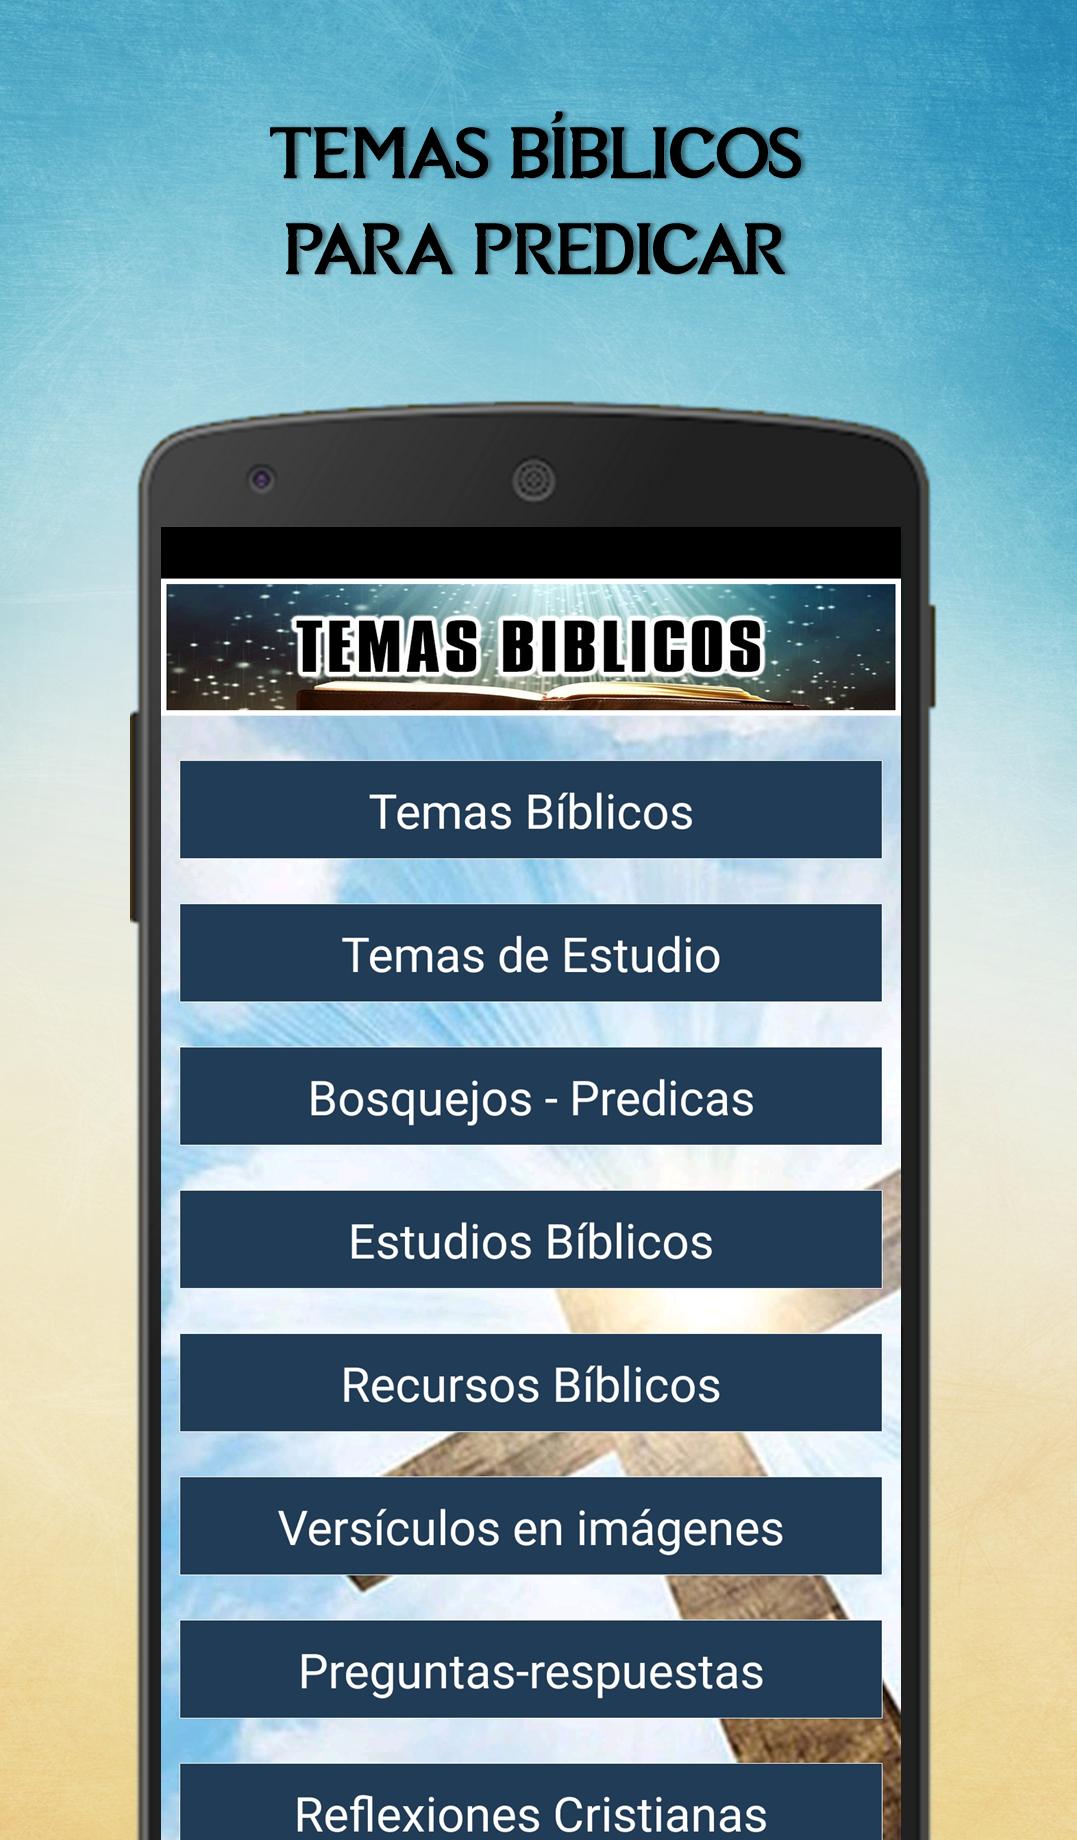 Temas Bíblicos para predicar 14.0.0 Screenshot 9